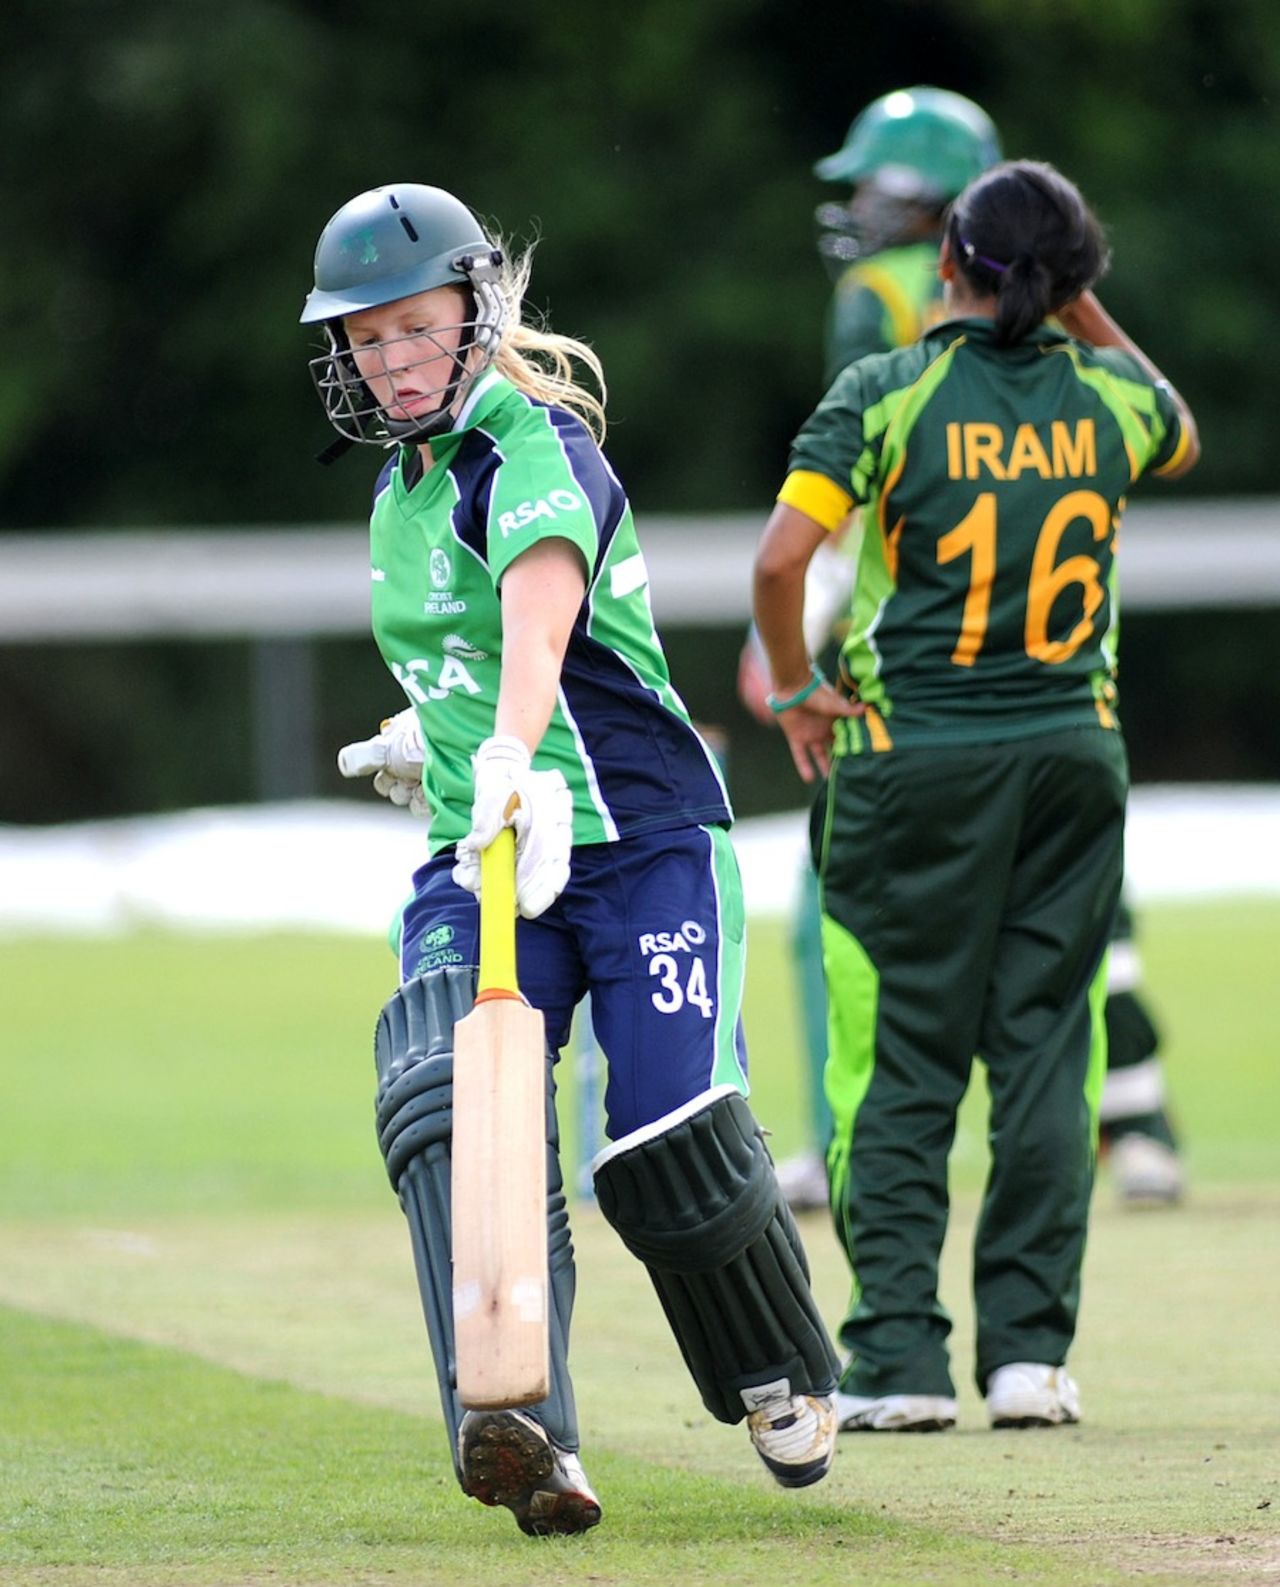 Kim Garth during her unbeaten knock of 38, Ireland Women v Pakistan Women, ICC Women's World Twenty20 Qualifiers, 1st semi-final, Dublin, July 29, 2013